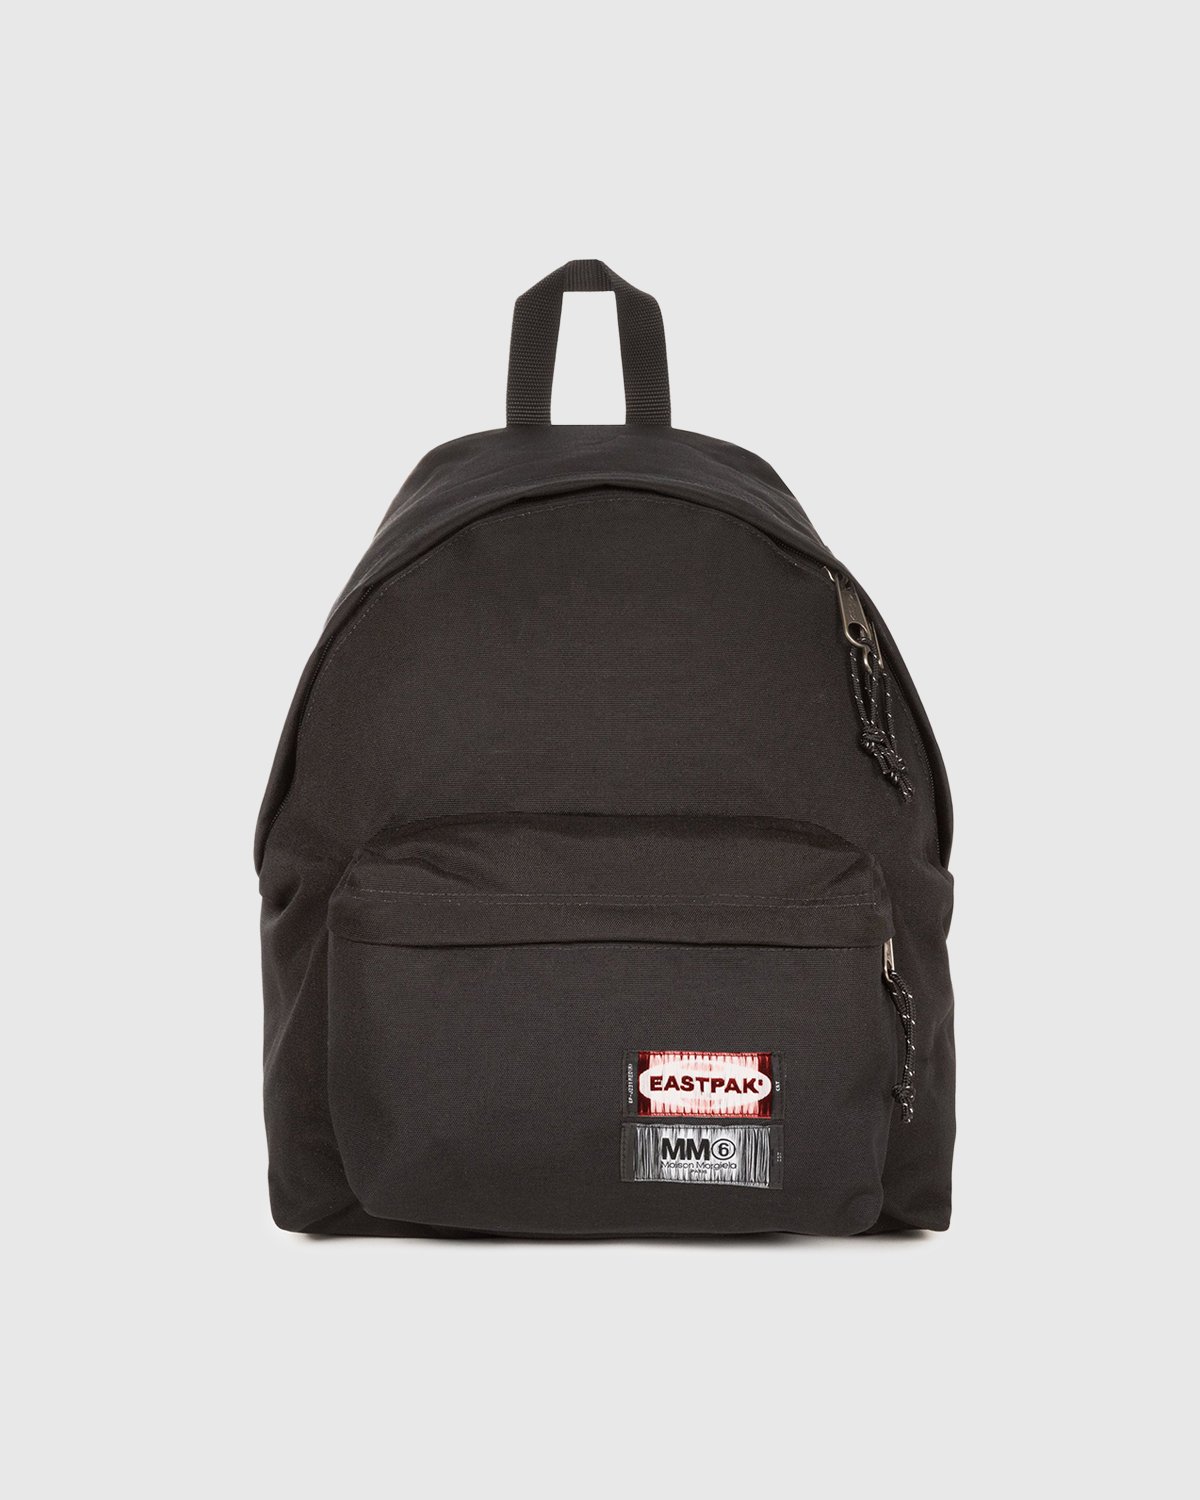 MM6 Maison Margiela x Eastpak - Padded Backpack Black - Accessories - Black - Image 1